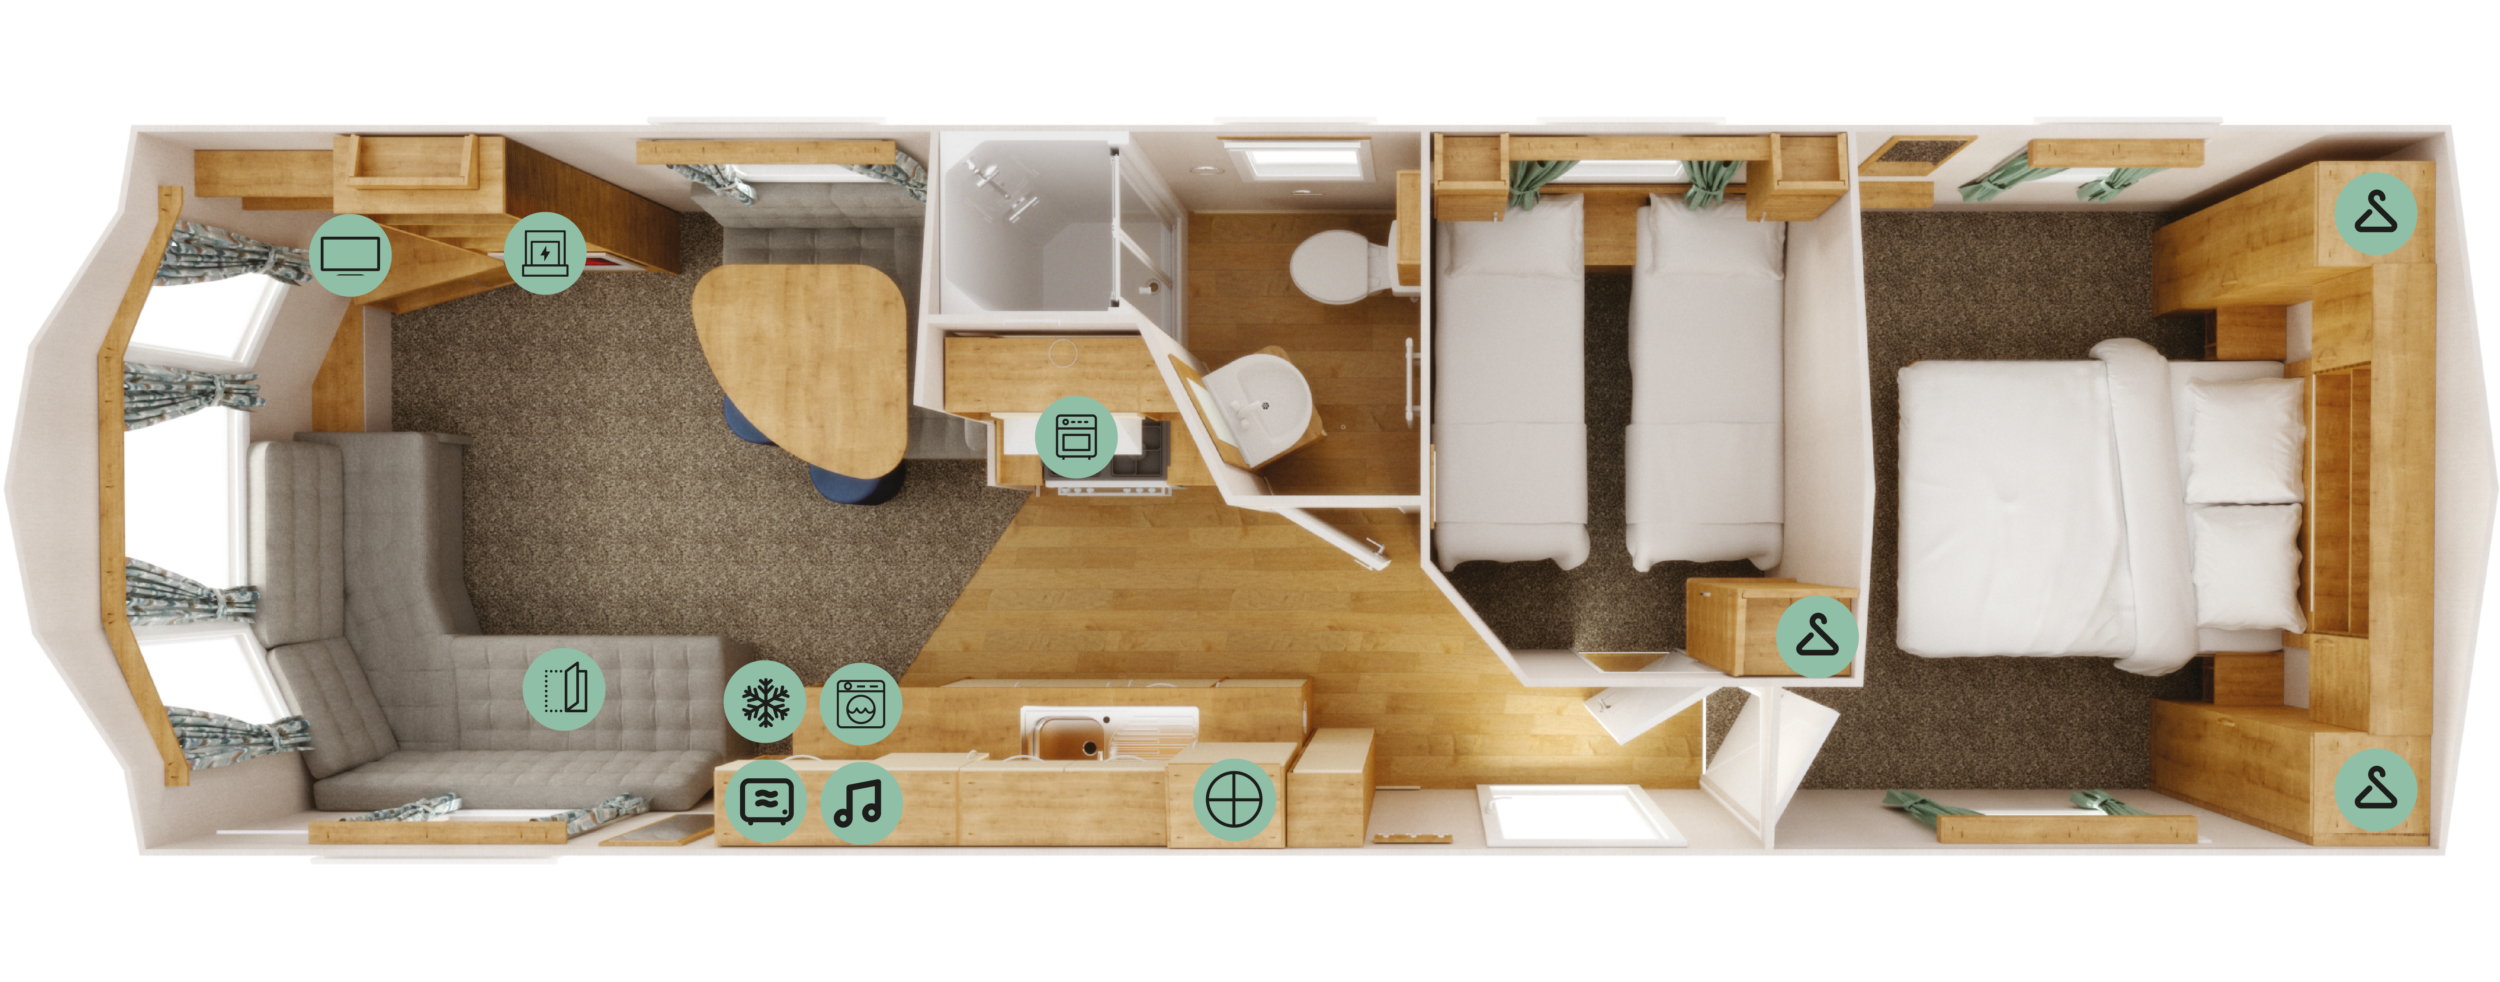 New Willerby Ashurst 32x10 2 bedroom floorplan static caravan